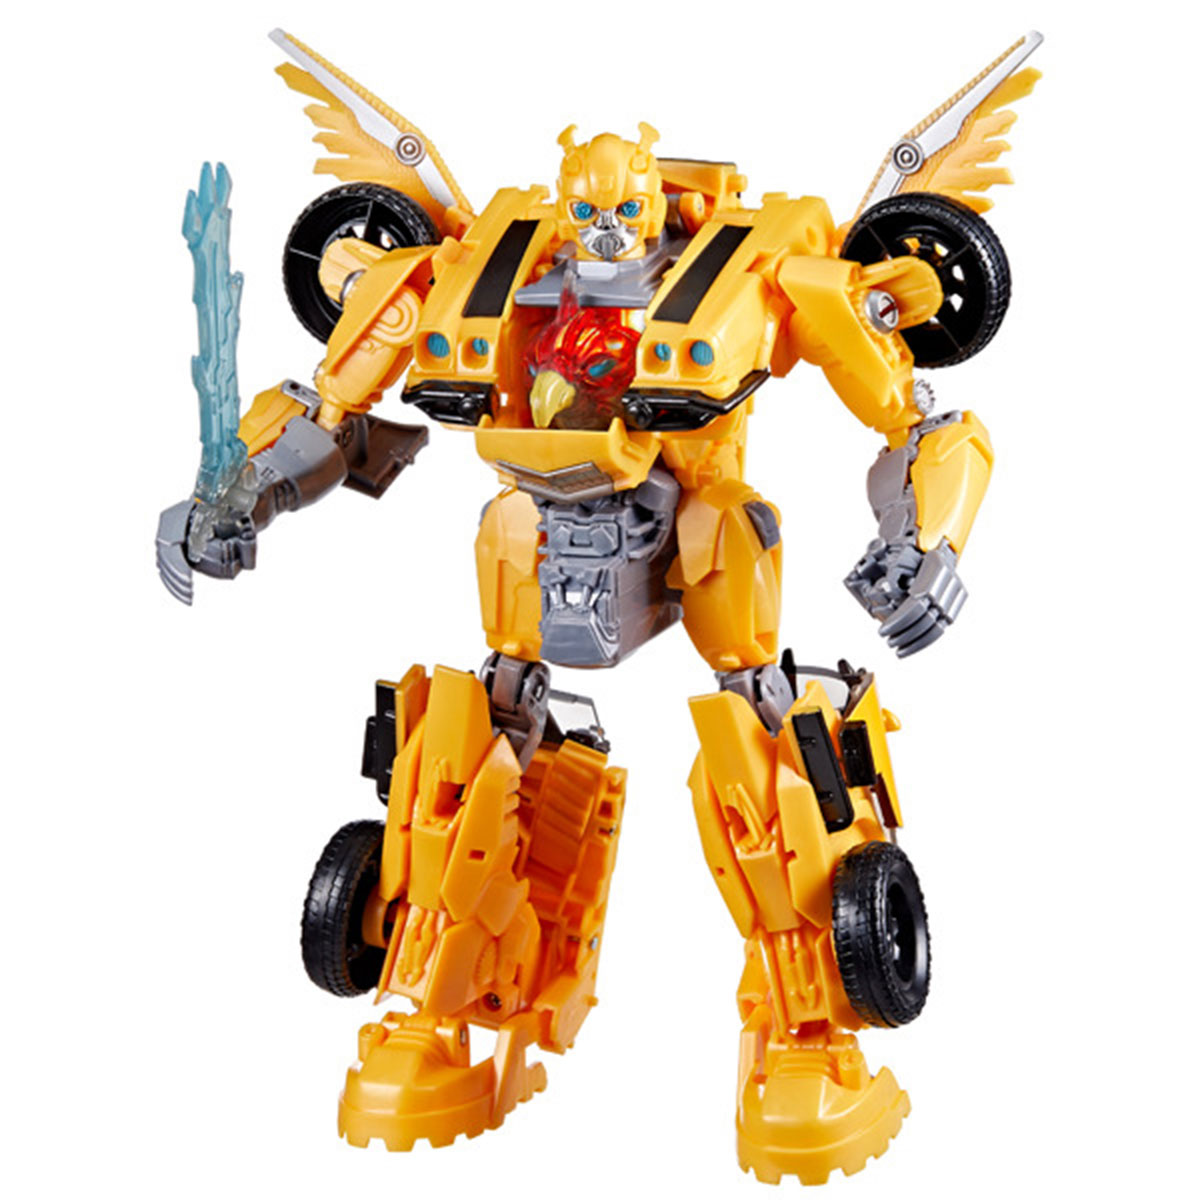 Transformers MV7 Beast Bumblebee Figur - 28cm (6år+)